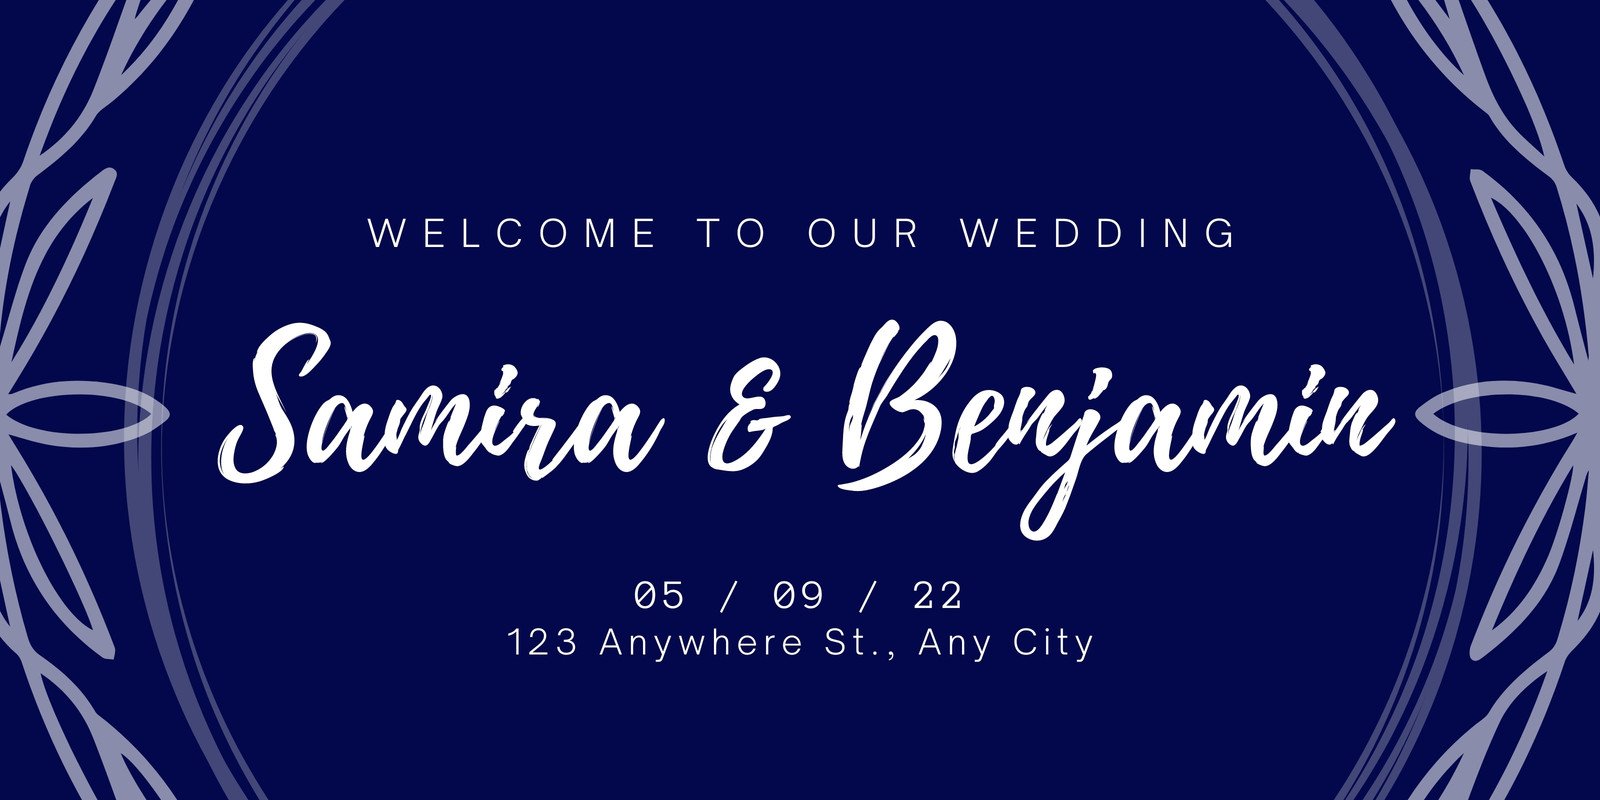 Free customizable wedding banner templates | Canva